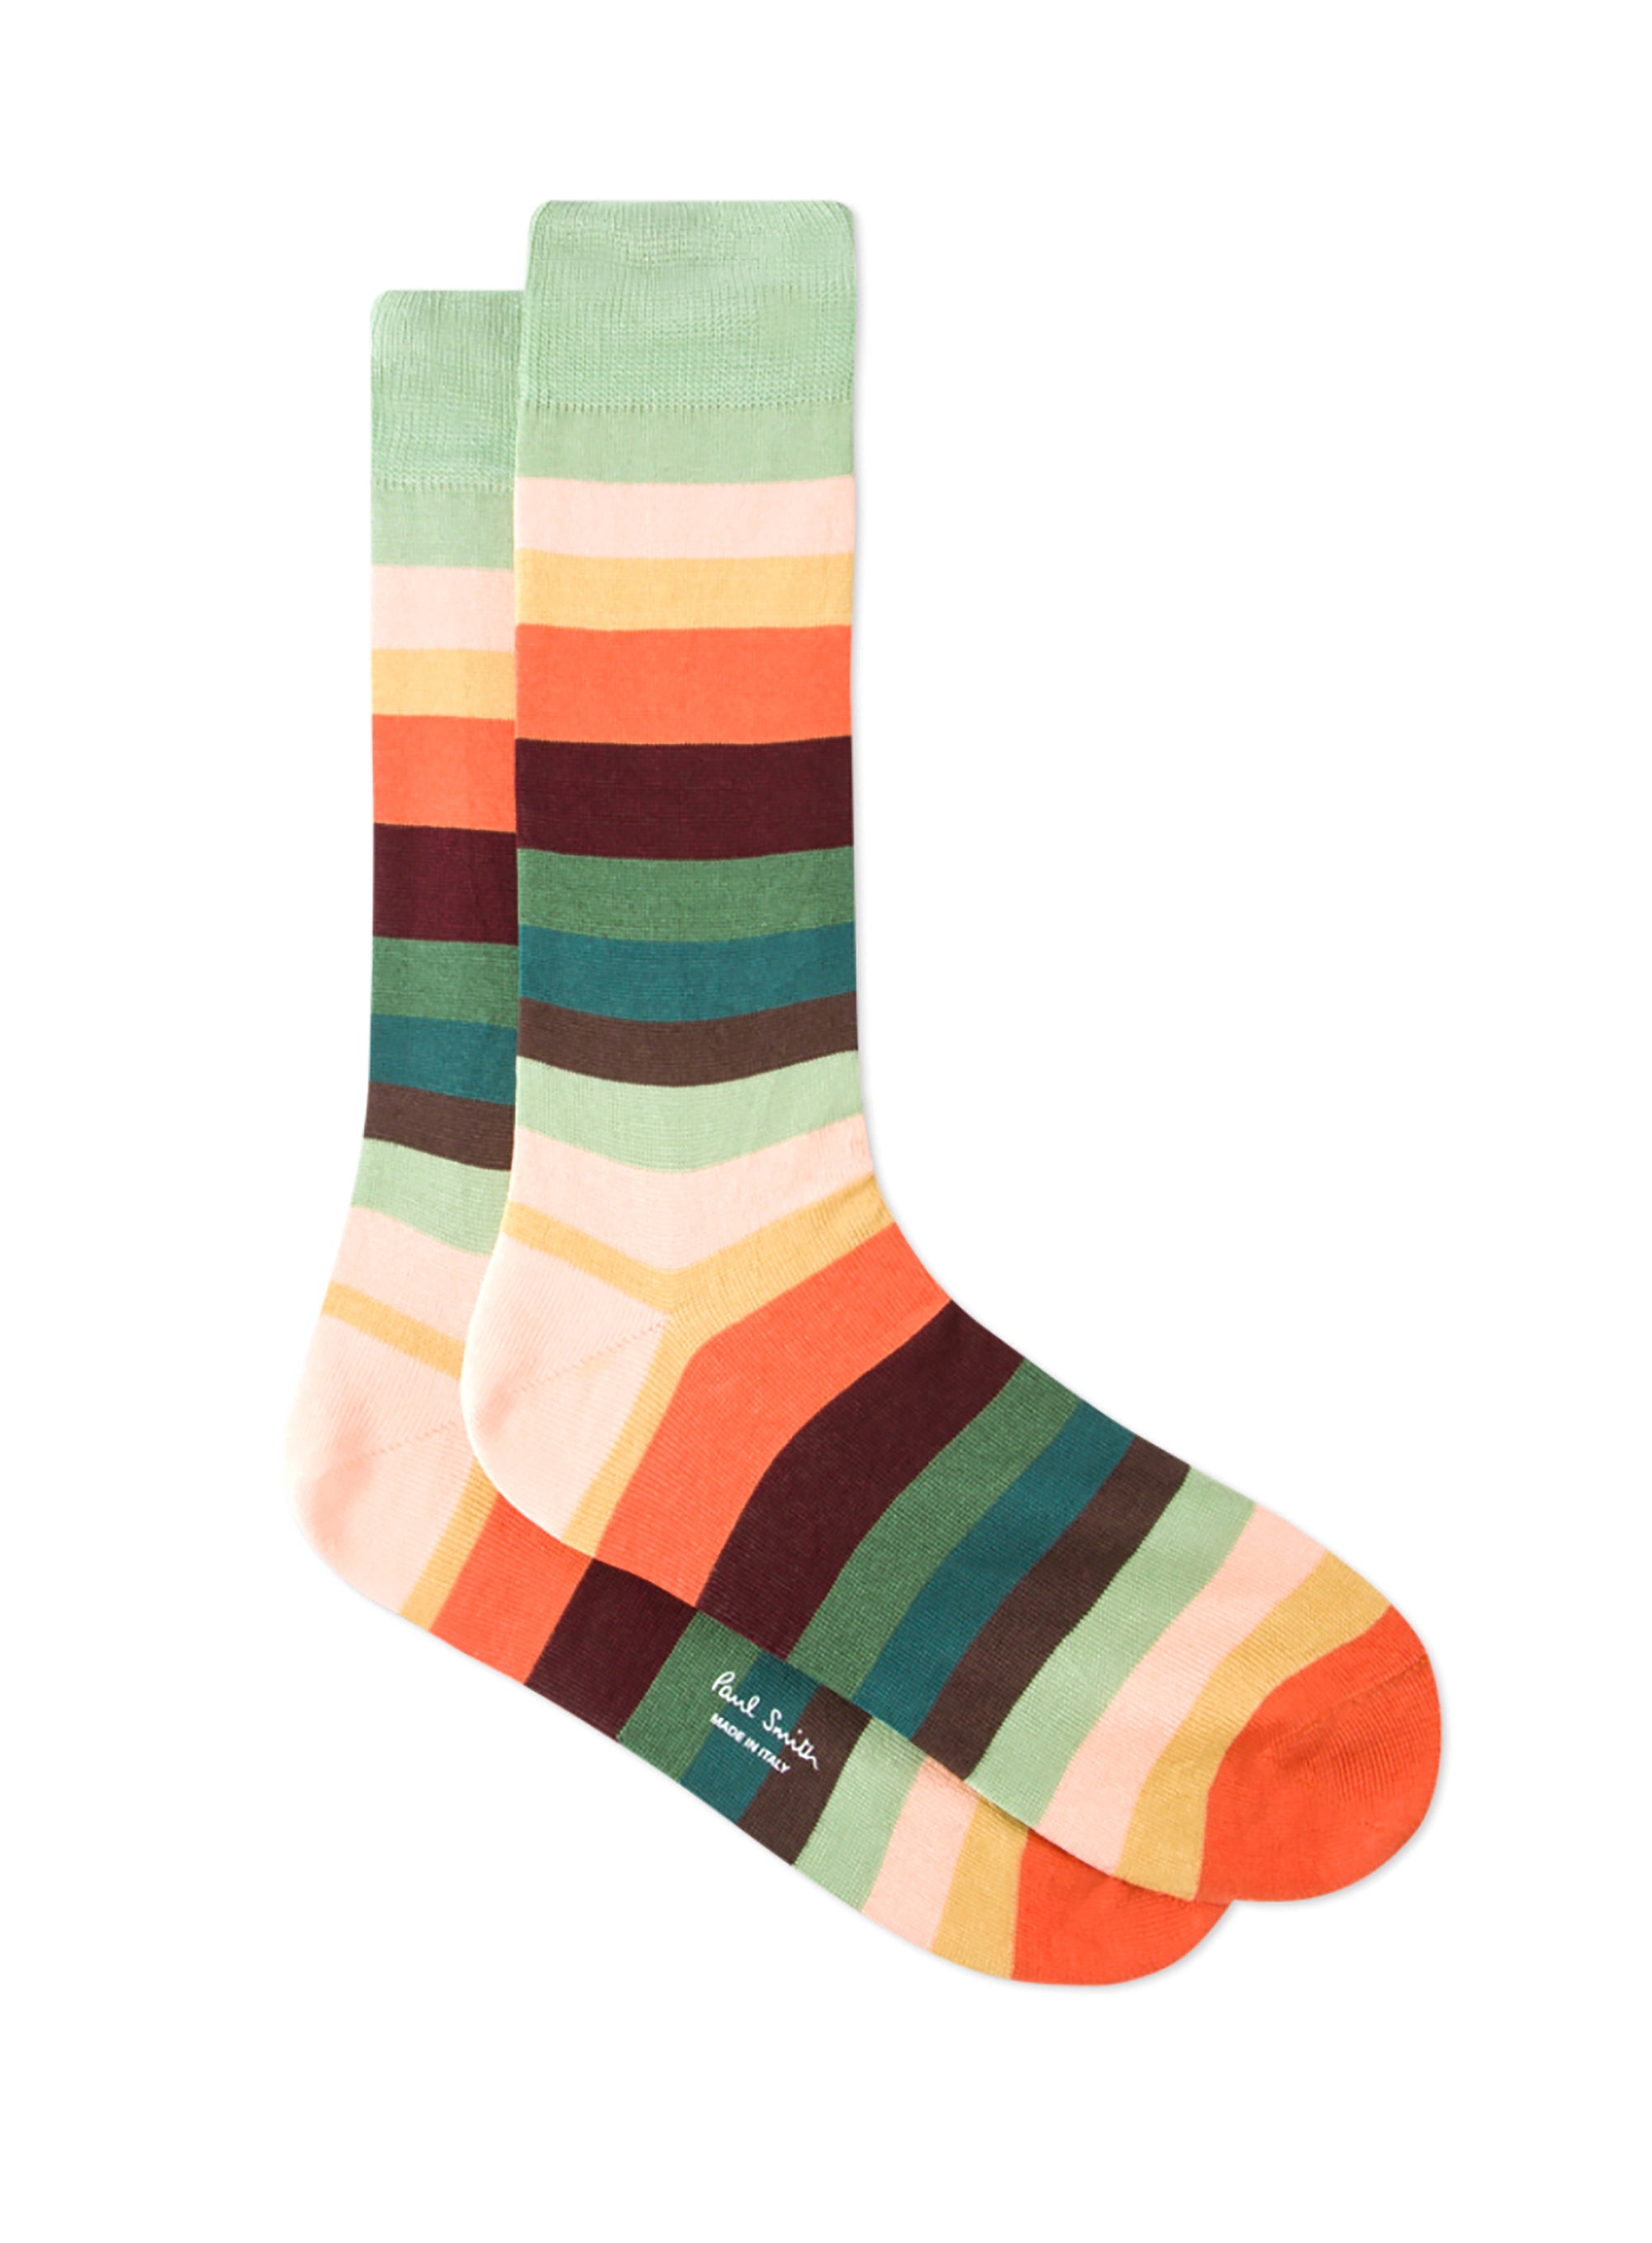 PAUL SMITH 'Artist Stripe' Socks - Solespun